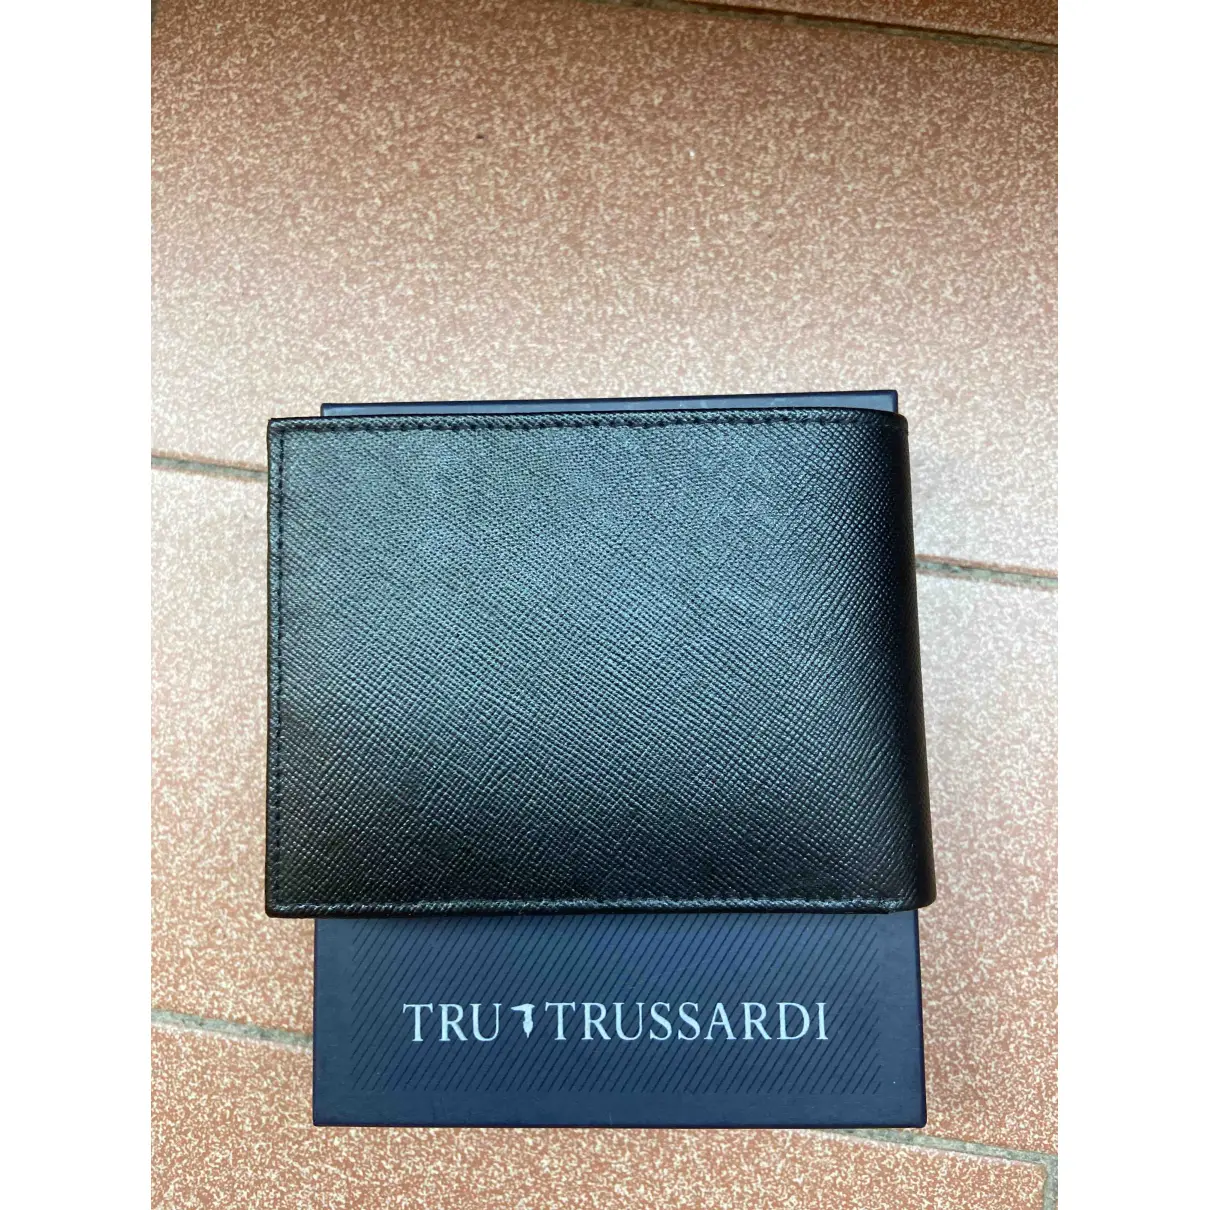 Buy Trussardi Small bag online